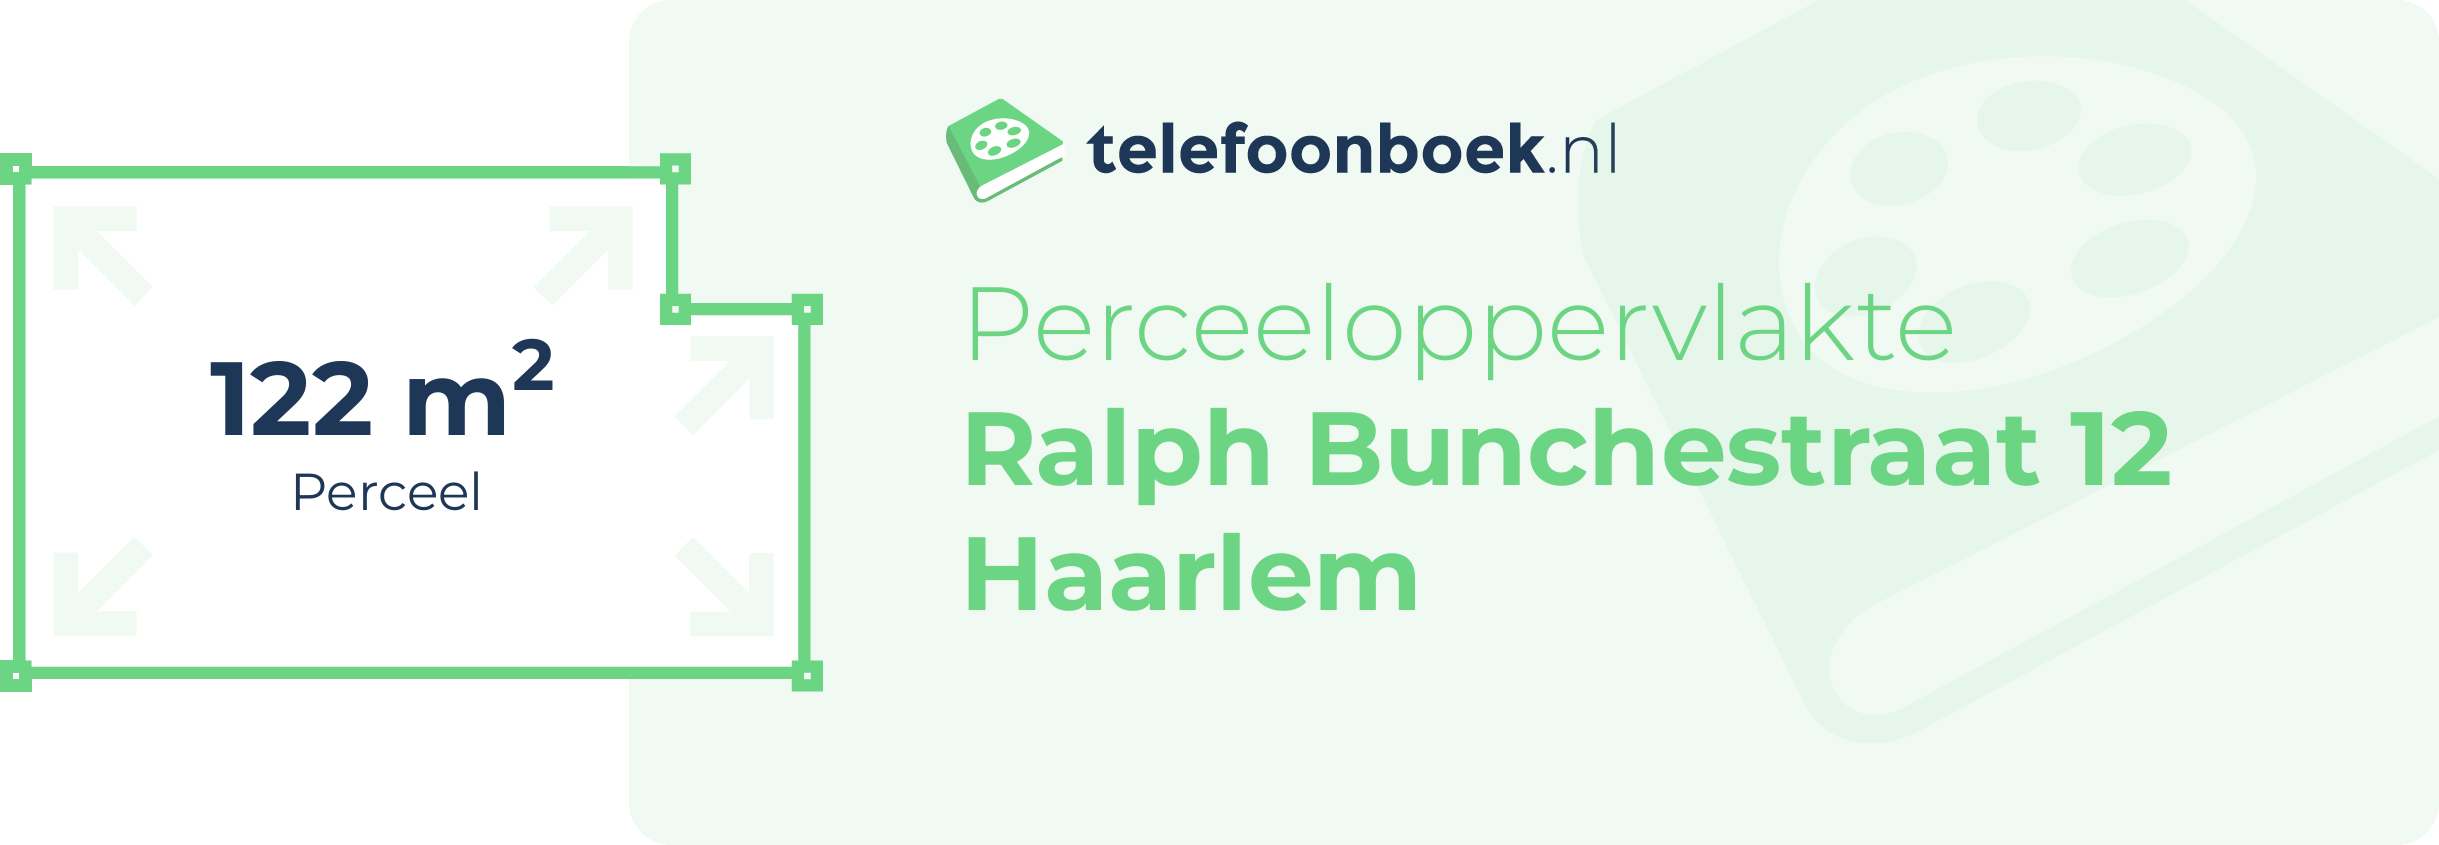 Perceeloppervlakte Ralph Bunchestraat 12 Haarlem